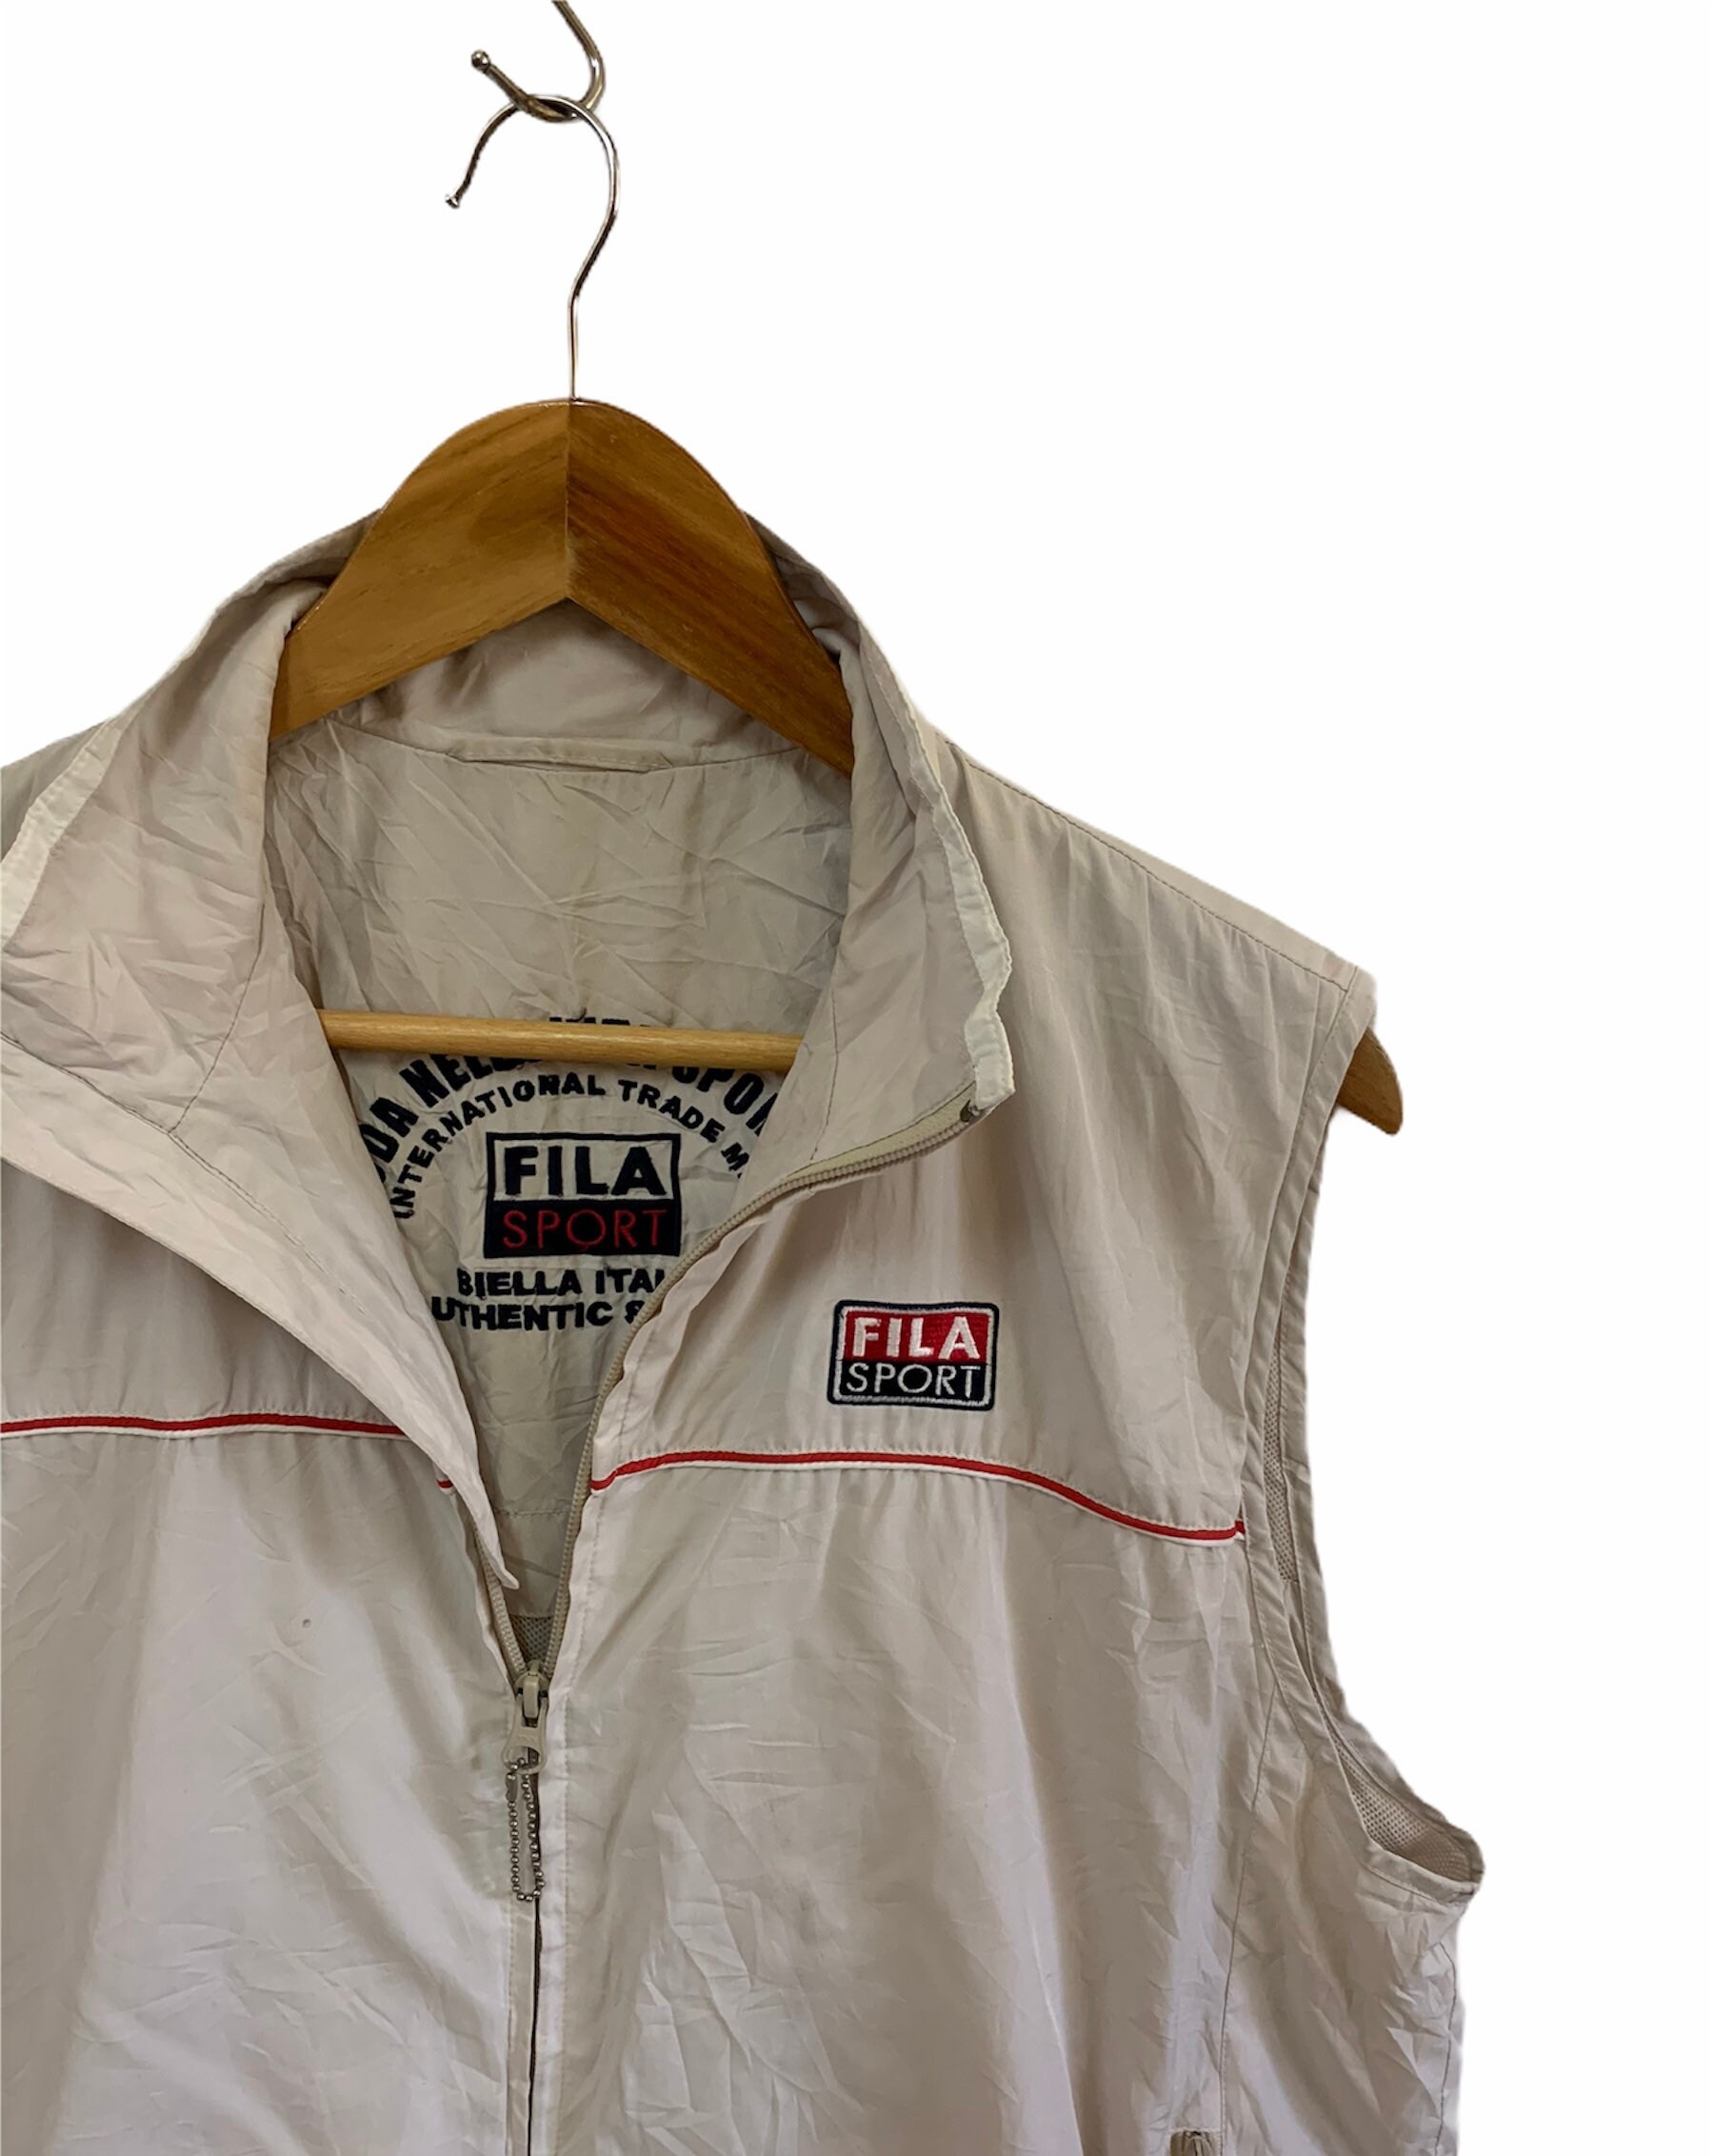 kader Bacteriën Zoek machine optimalisatie Vintage 90s Fila Biela Italia Vests Outwear Accessories Fila - Etsy